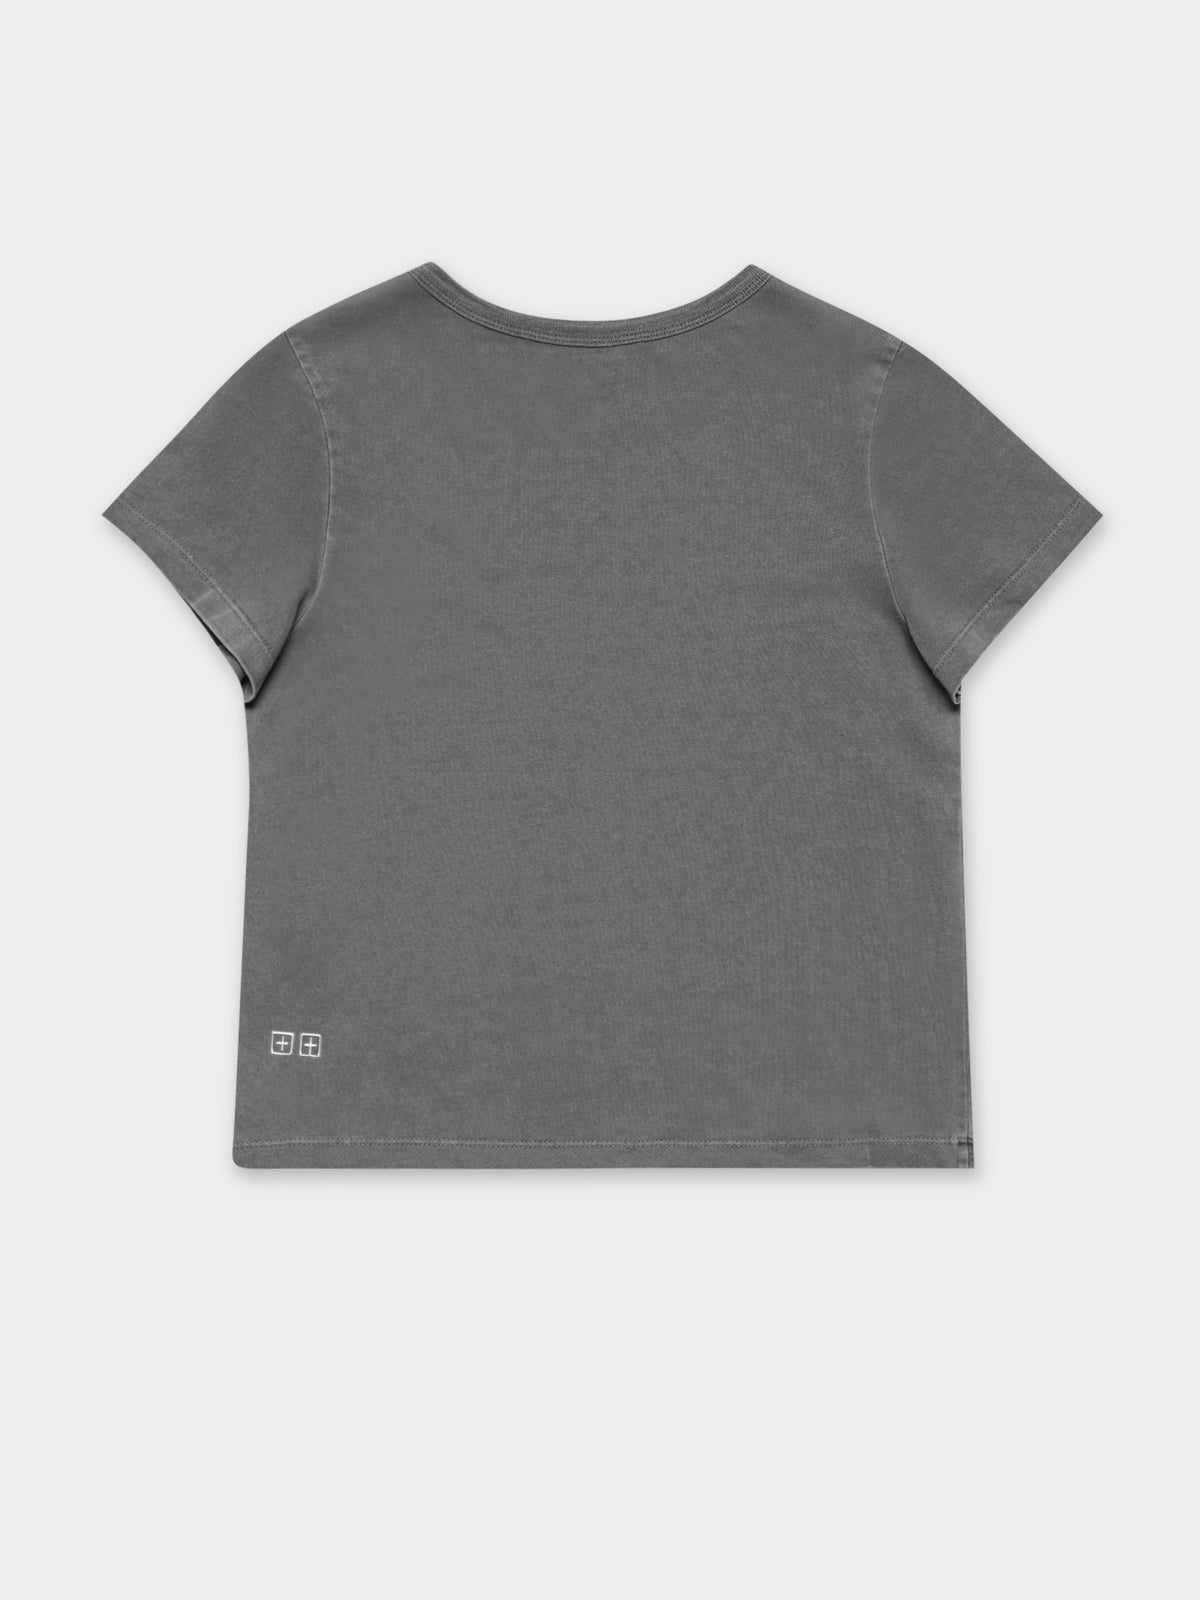 Alloy SOTT Mini T-Shirt in Vintage Grey